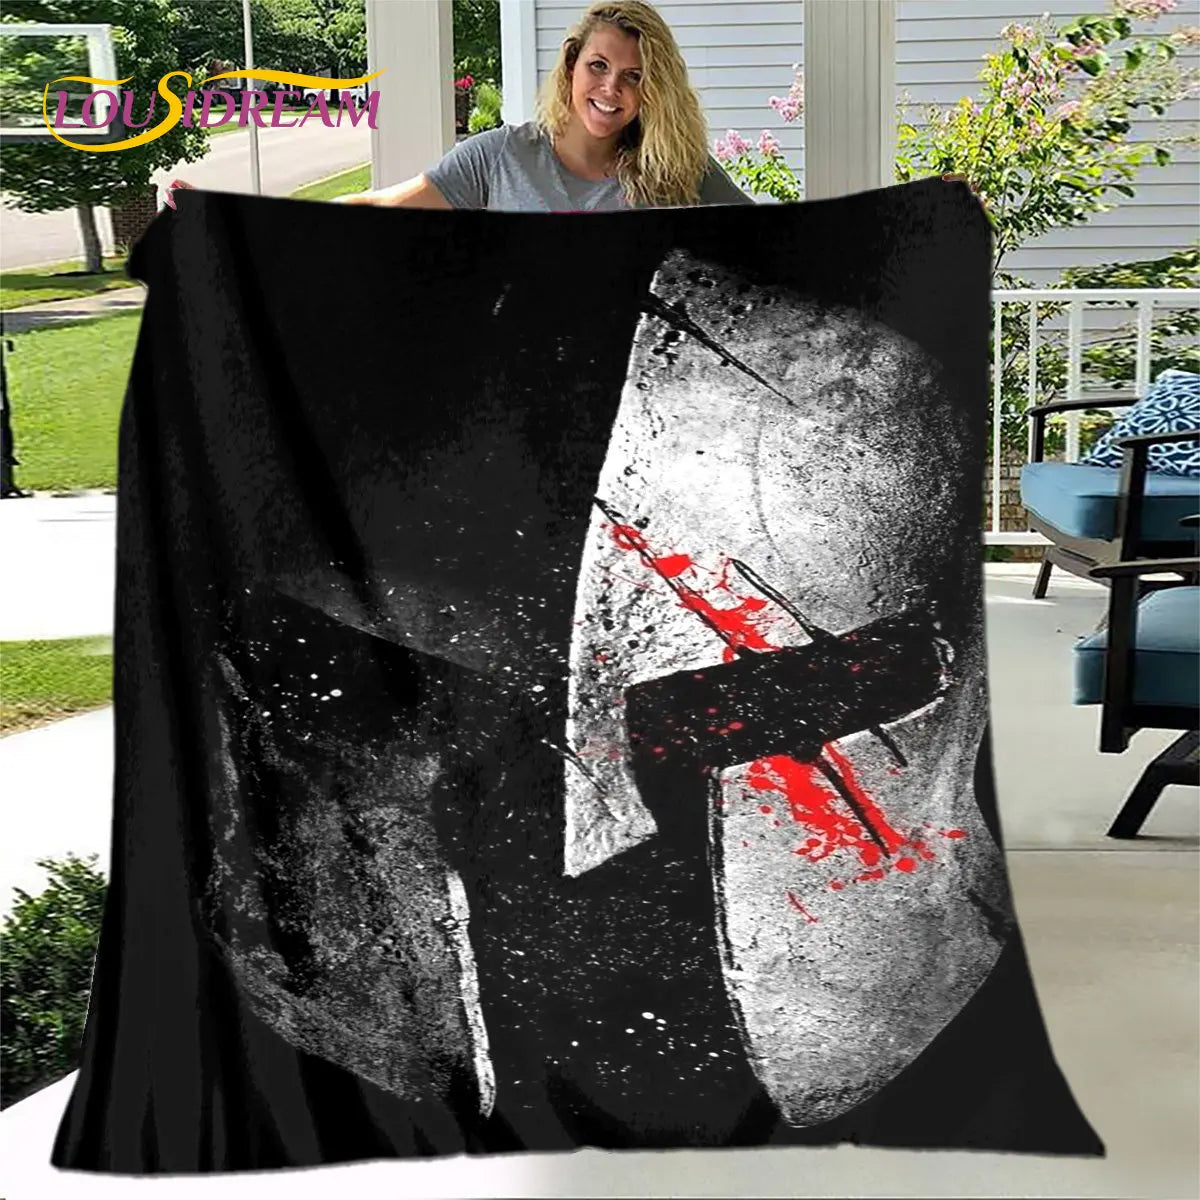 Cavalier Knight Templar Crusaders Games Soft Plush Blanket,Flannel Blanket Throw Blanket for Living Room Bedroom Bed Sofa Picnic